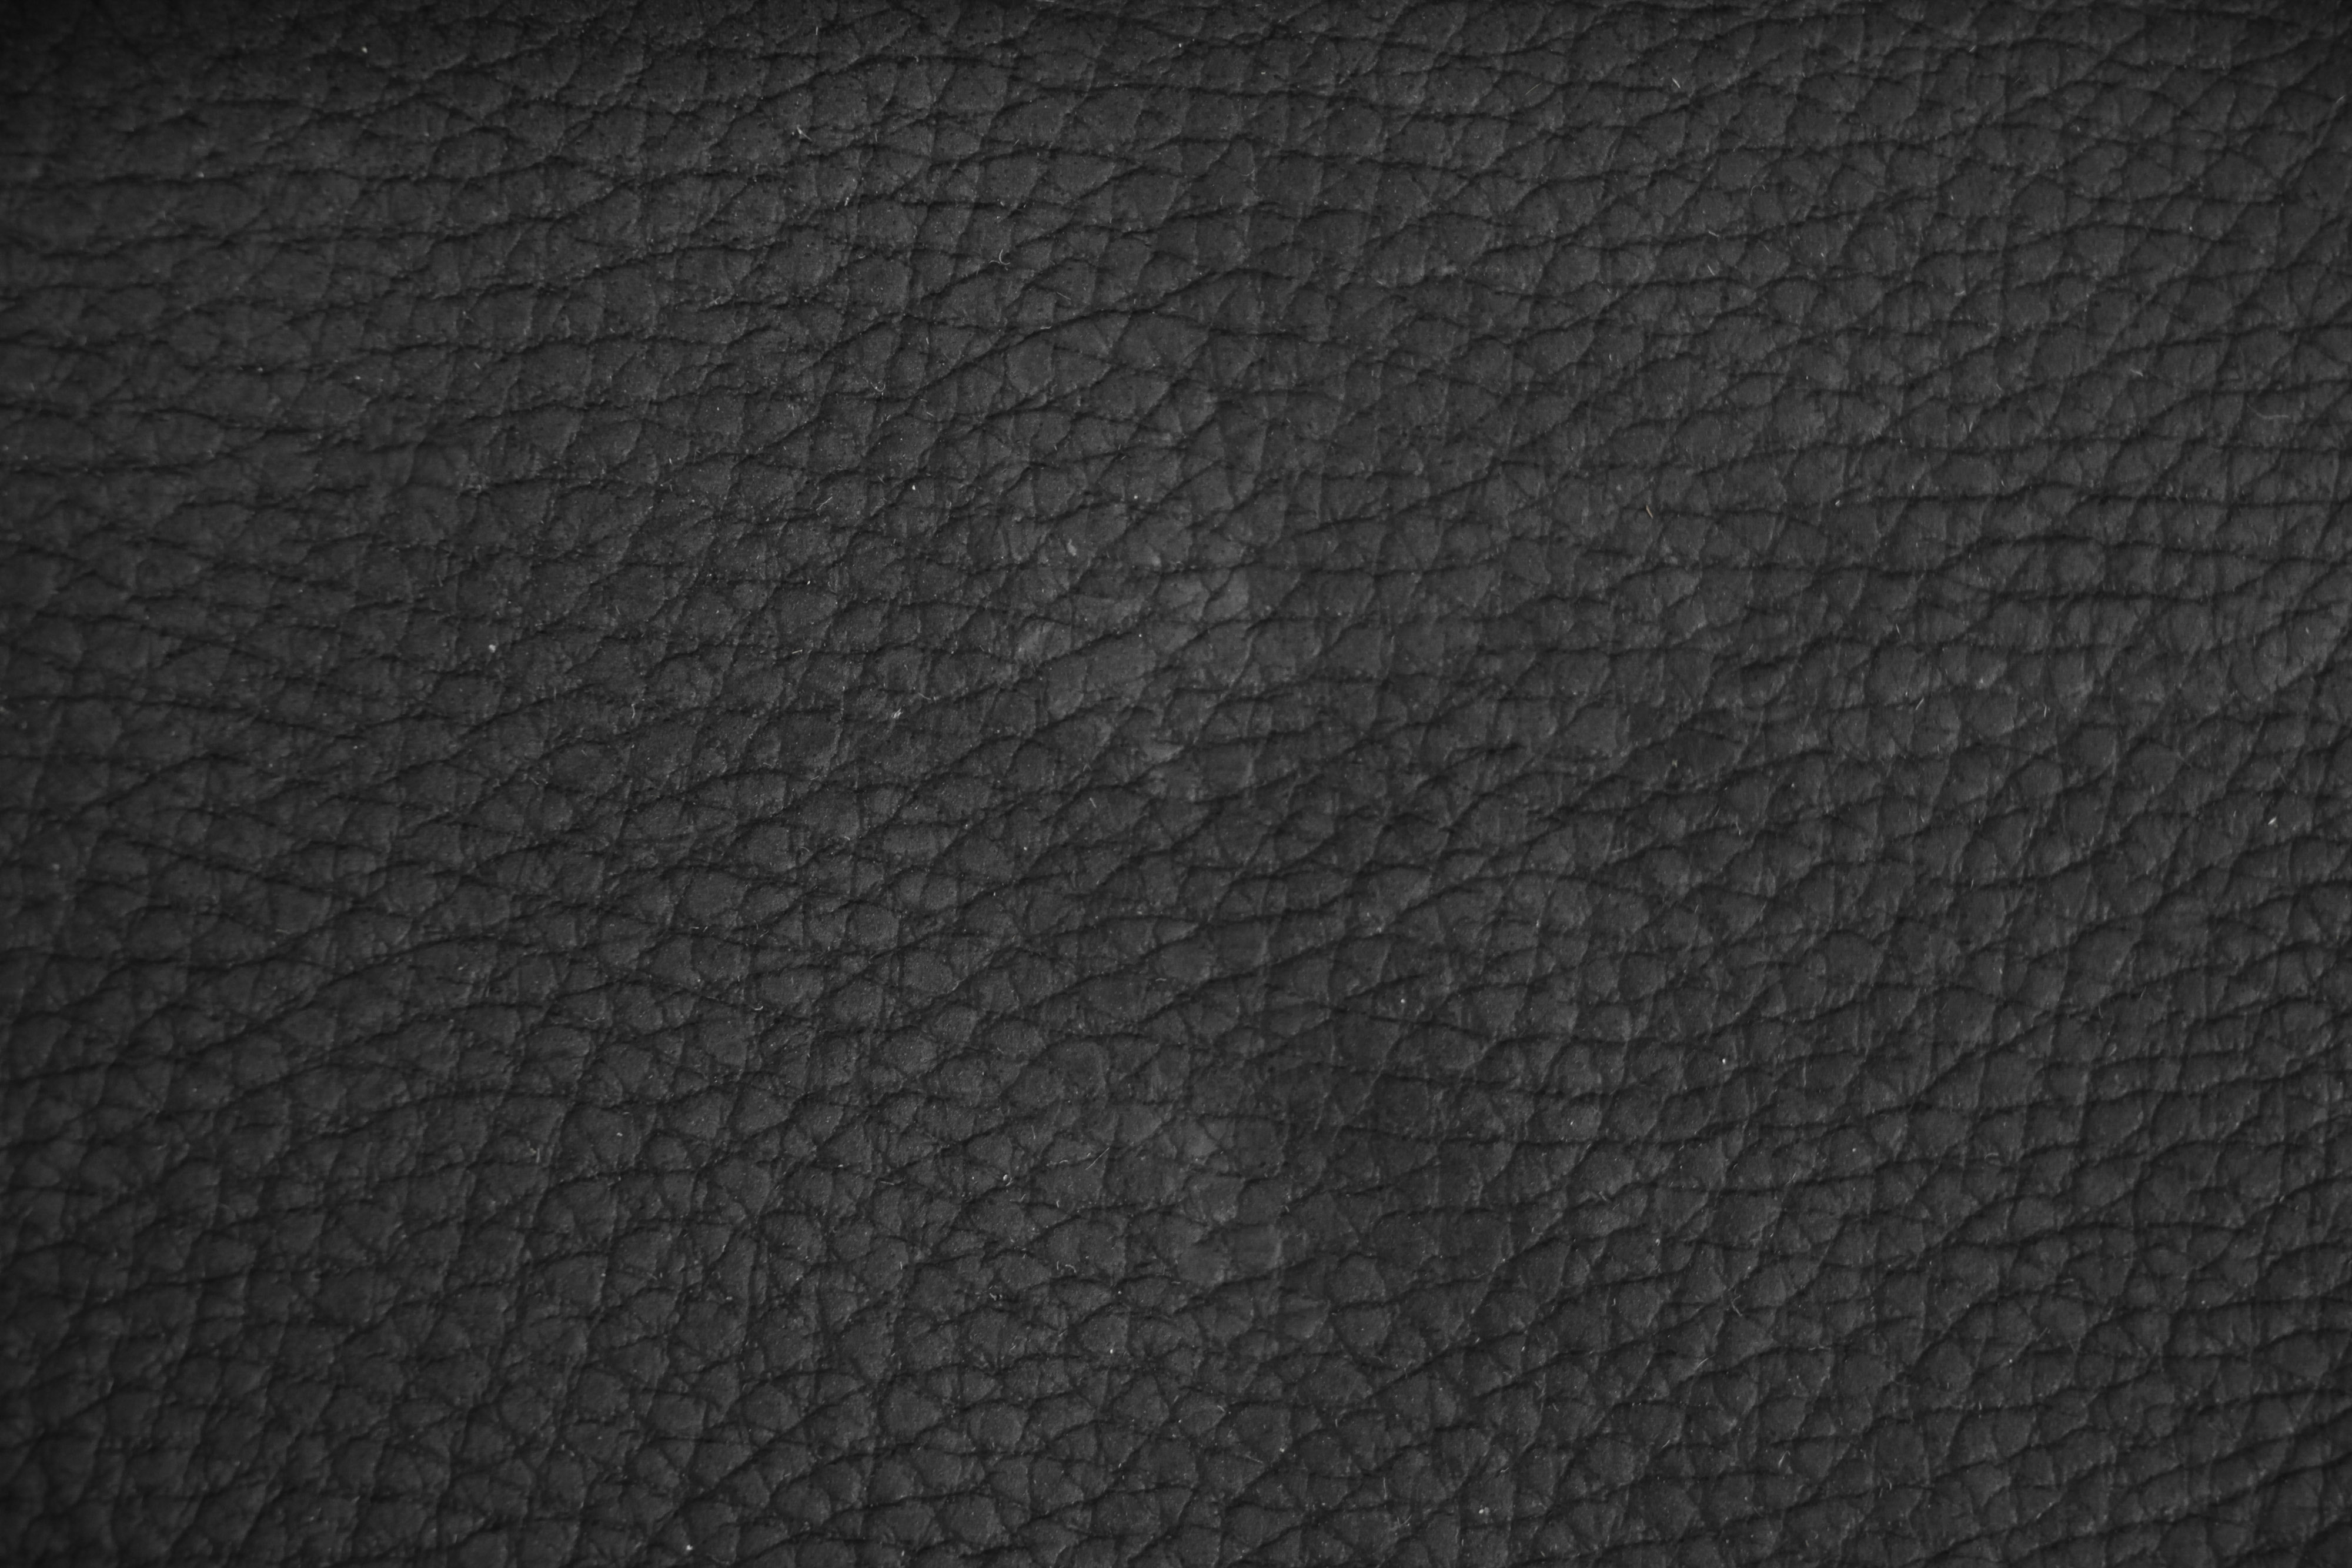 Black Leather Texture Large Close Up Grain Material Dark Fabric Stock